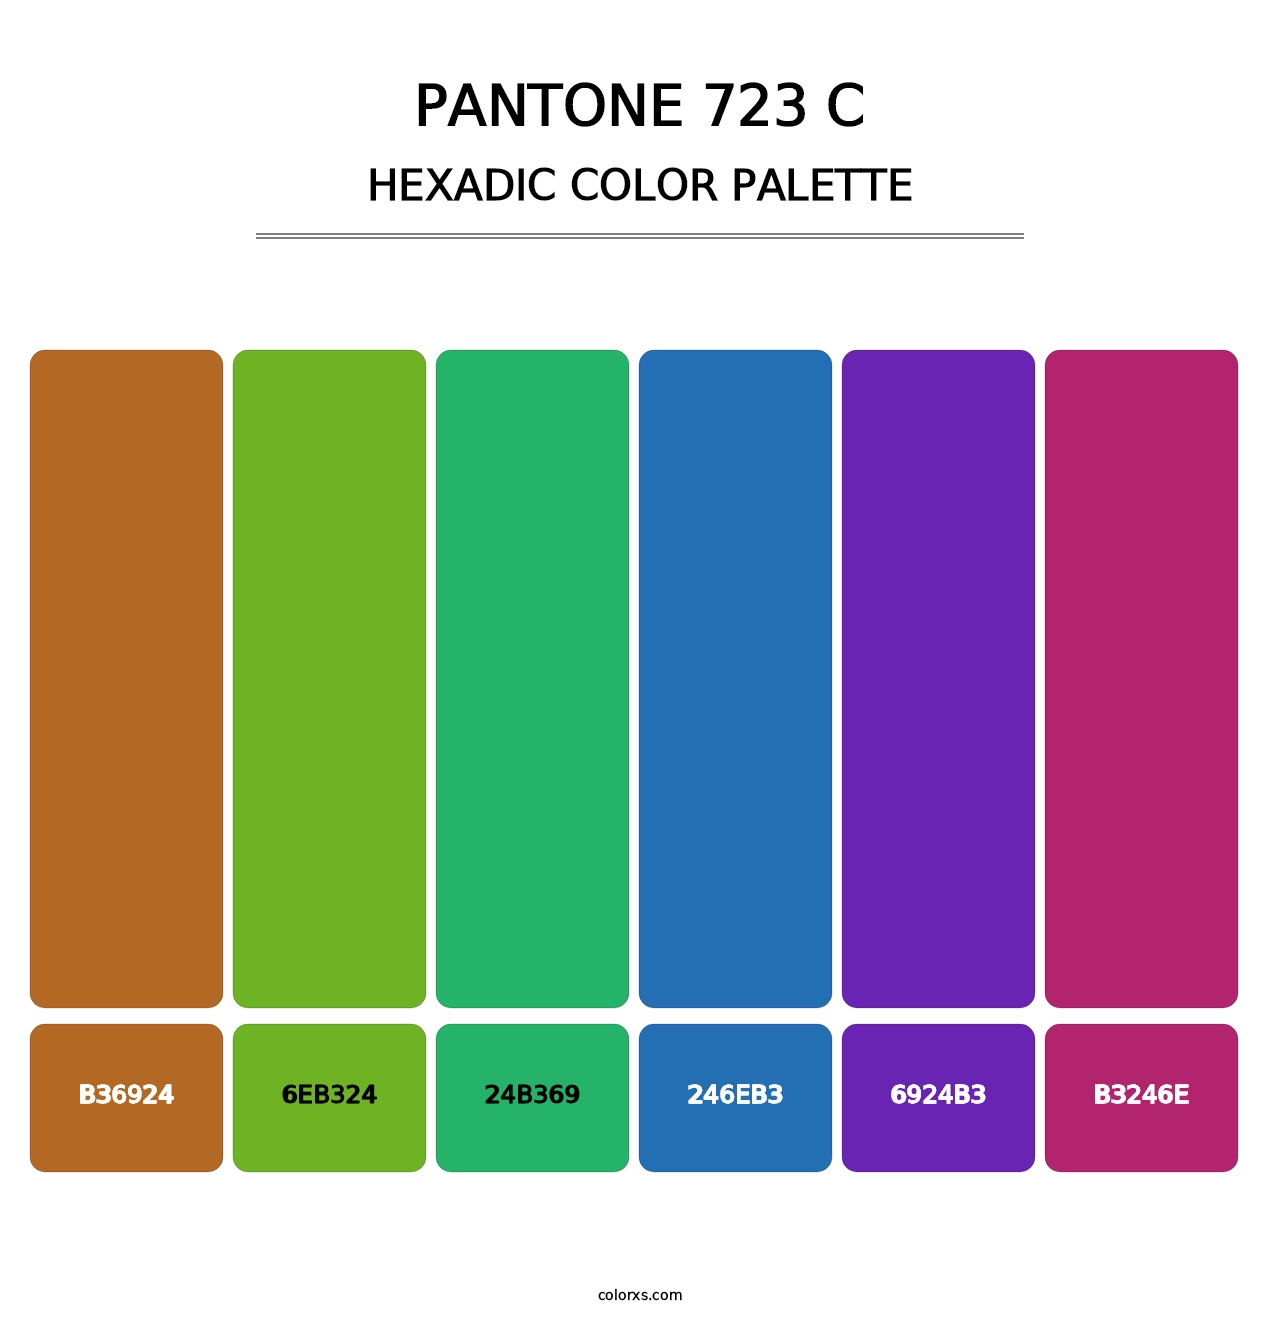 PANTONE 723 C - Hexadic Color Palette